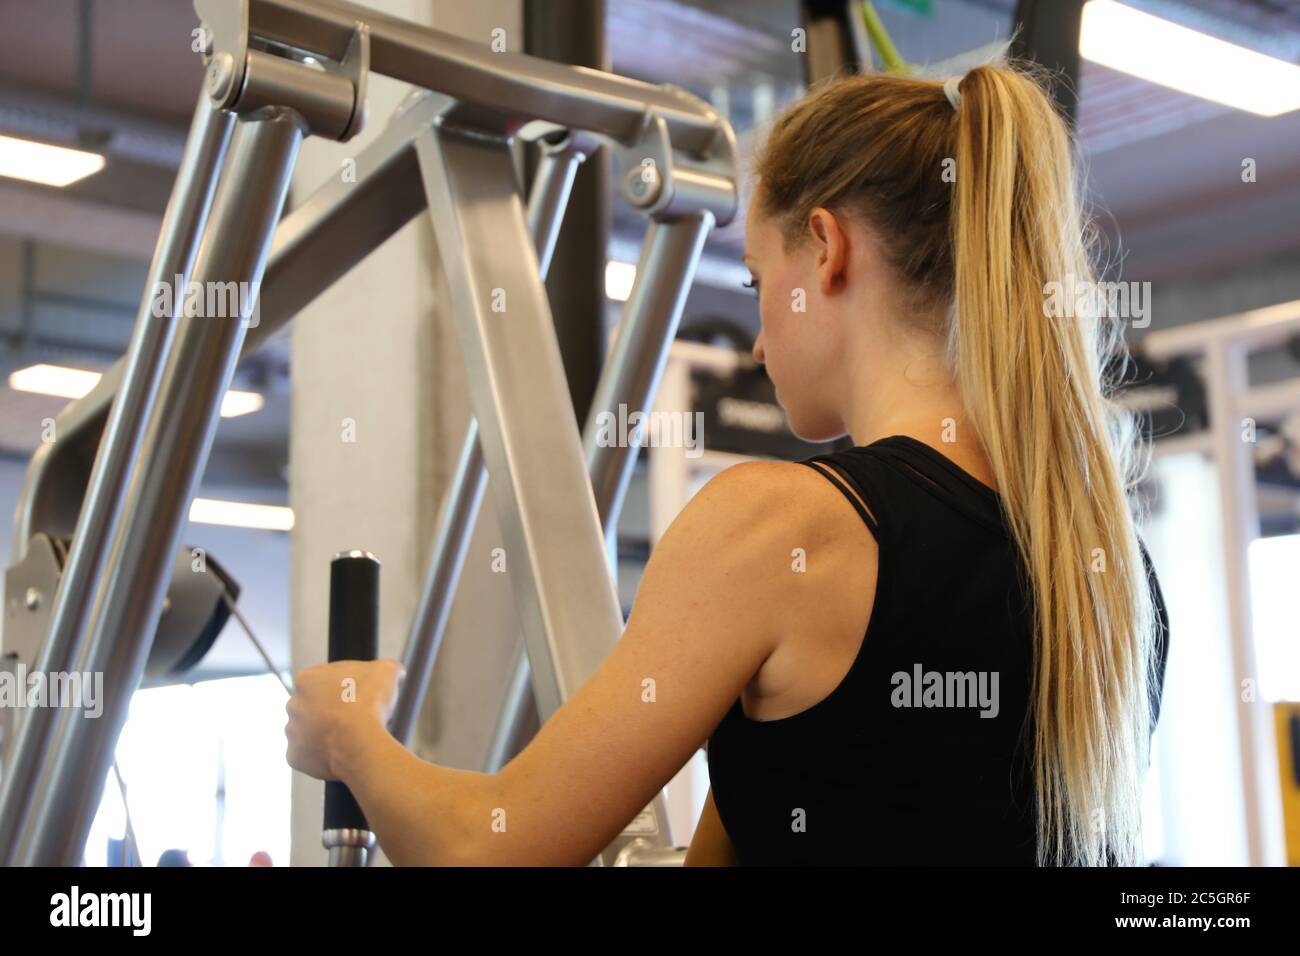 Junge Frau beim Gerätetraining Fitnessstudio (modello rilasciato) Foto Stock